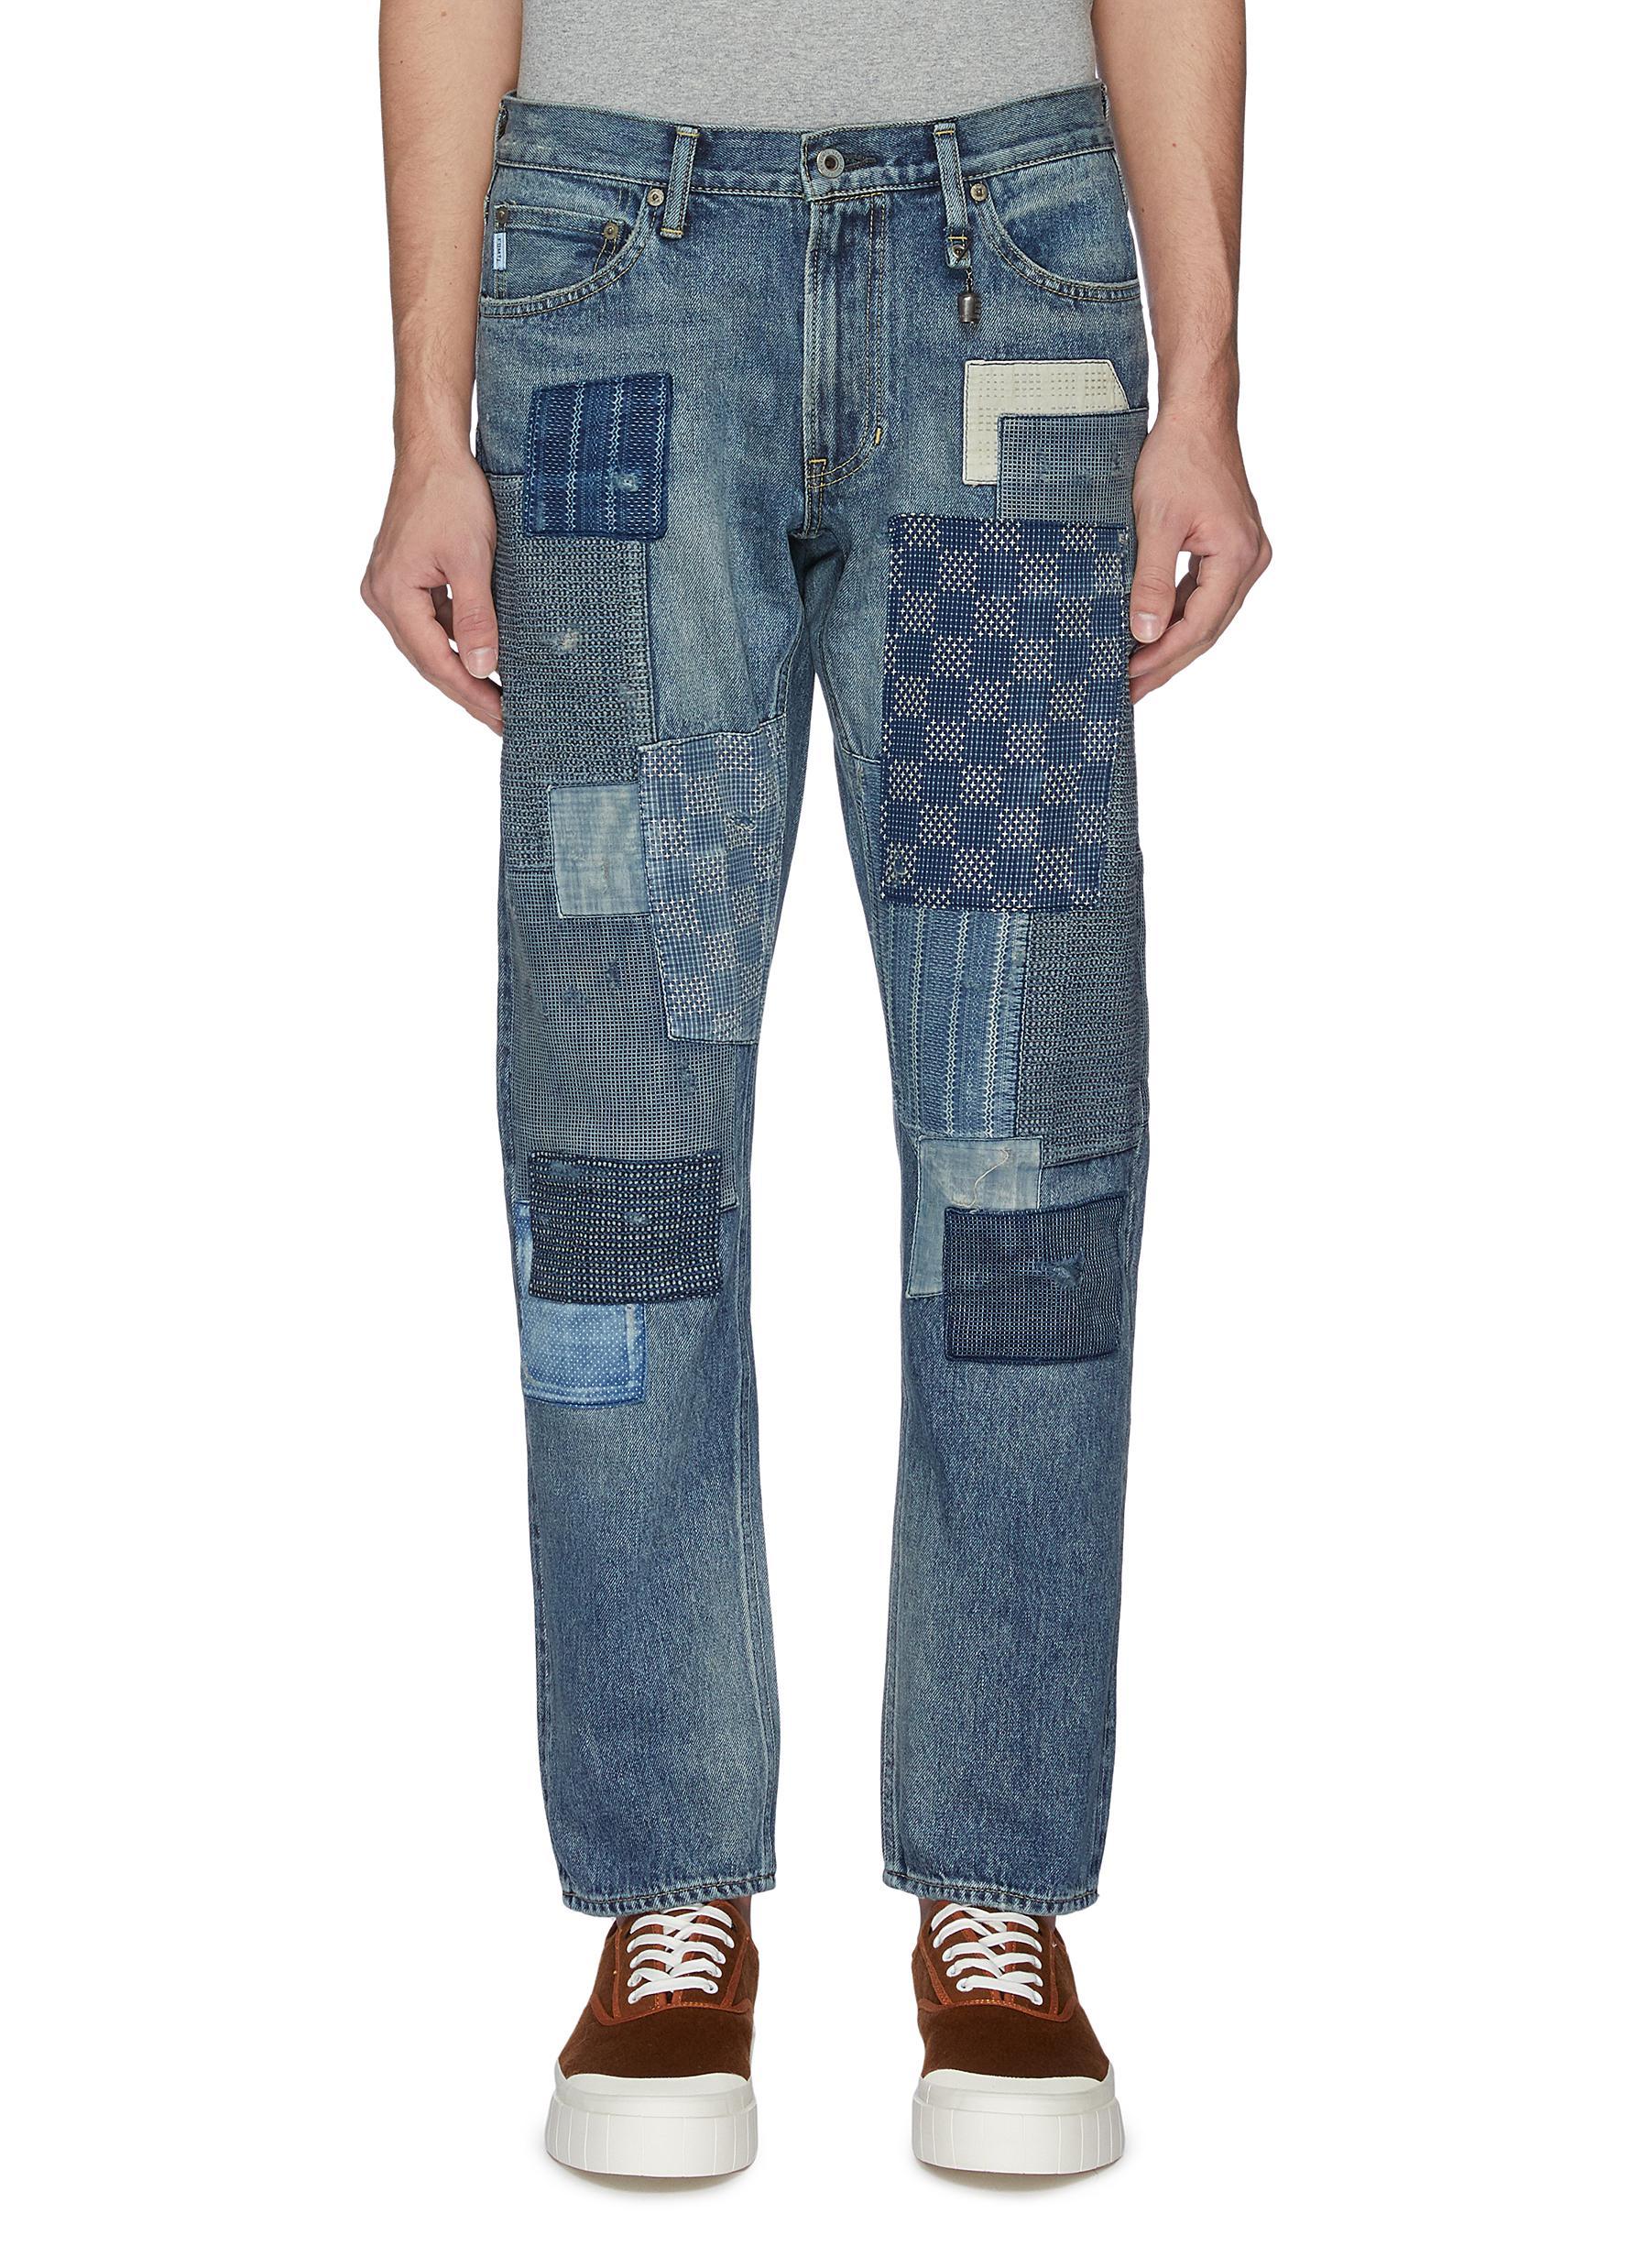 FDMTL Denim Mix Panel Boro Patchwork Jeans in Blue for Men - Lyst